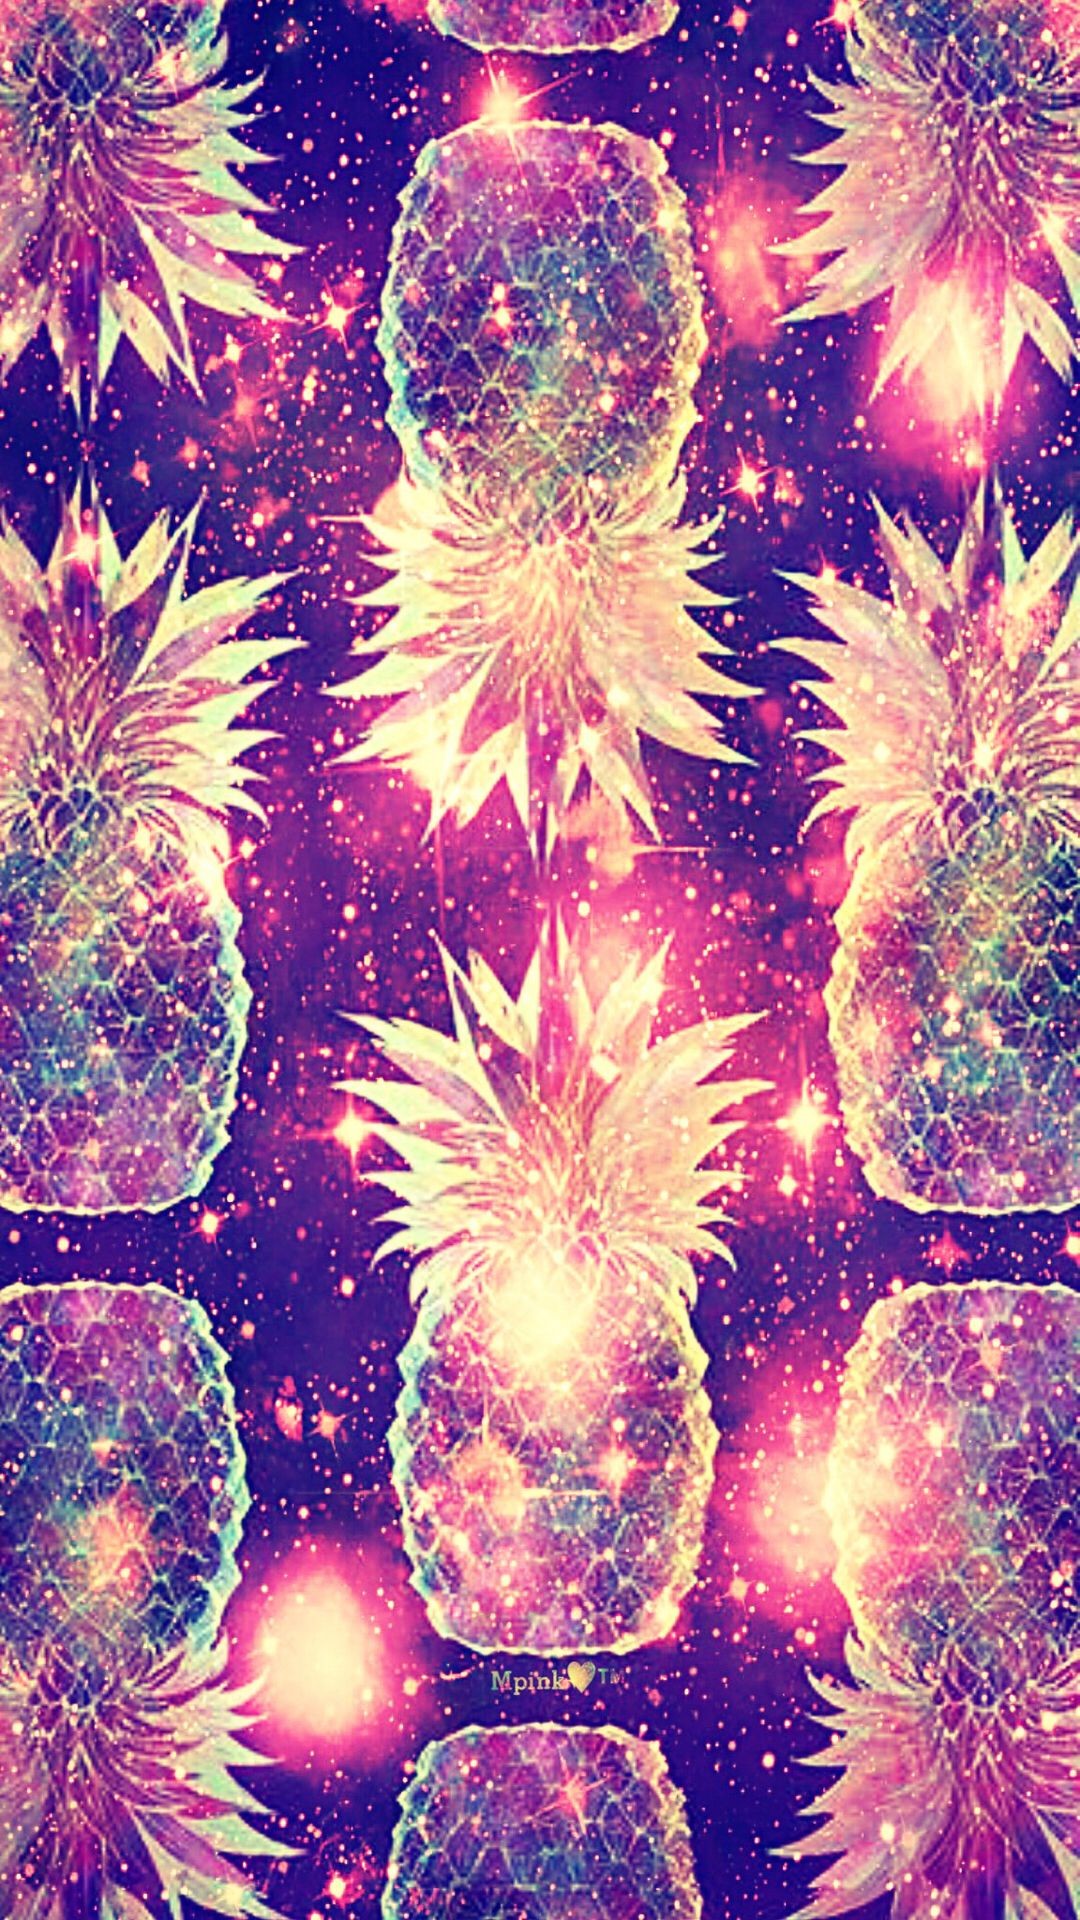 1080x1920 Glow Pineapples Galaxy Wallpaper #androidwallpaper #iphonewallpaper # wallpaper #galaxy #sparkle #glitter #lockscreen #pretty #pink #cute #girly  #pineapples ...